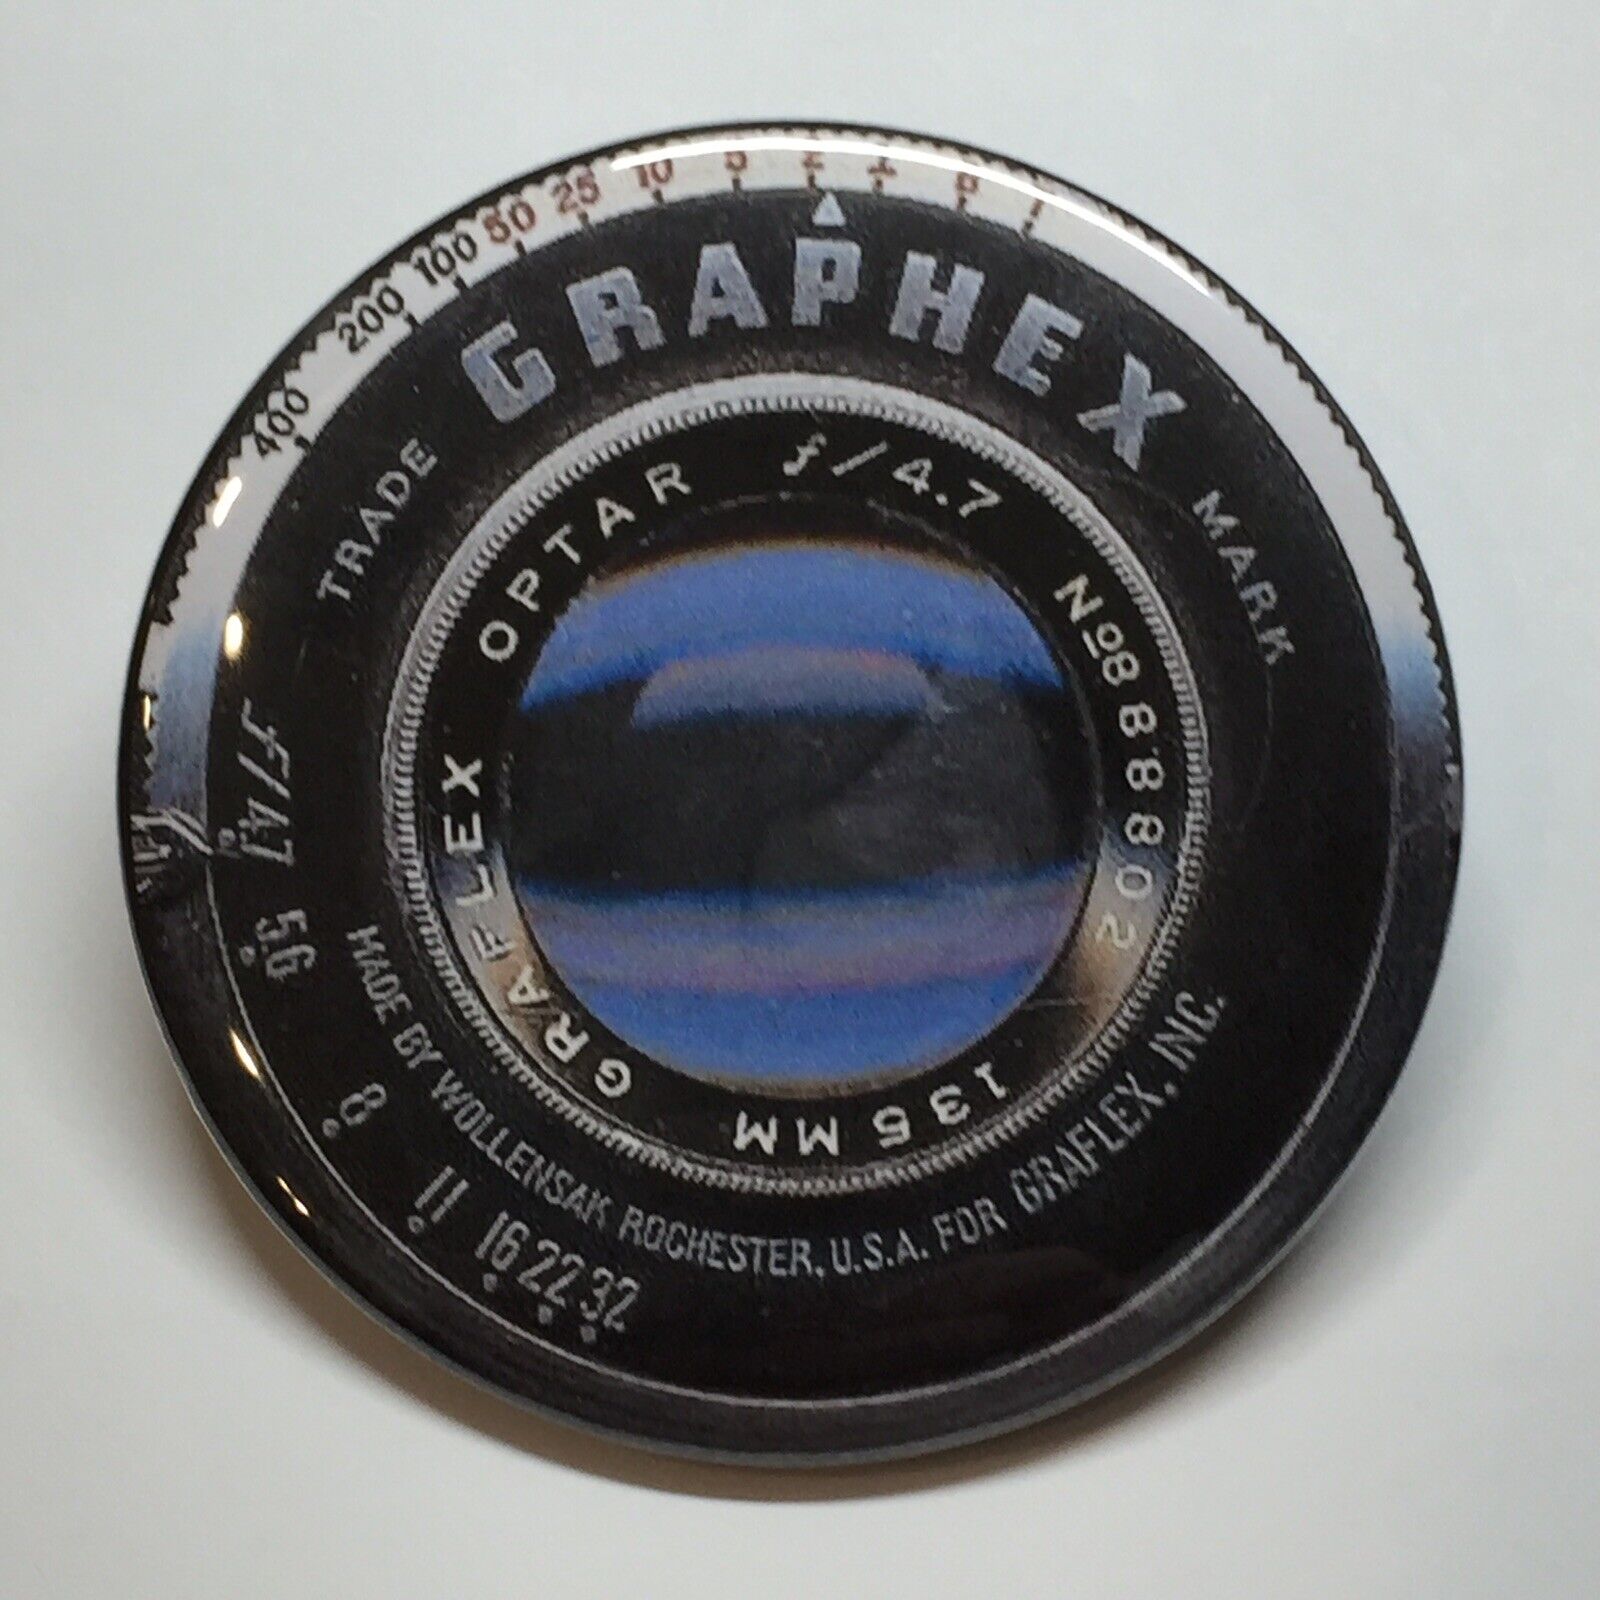 Graphex Camera Lens Fridge Magnet BUY 3, GET 4 FREE MIX & MATCH